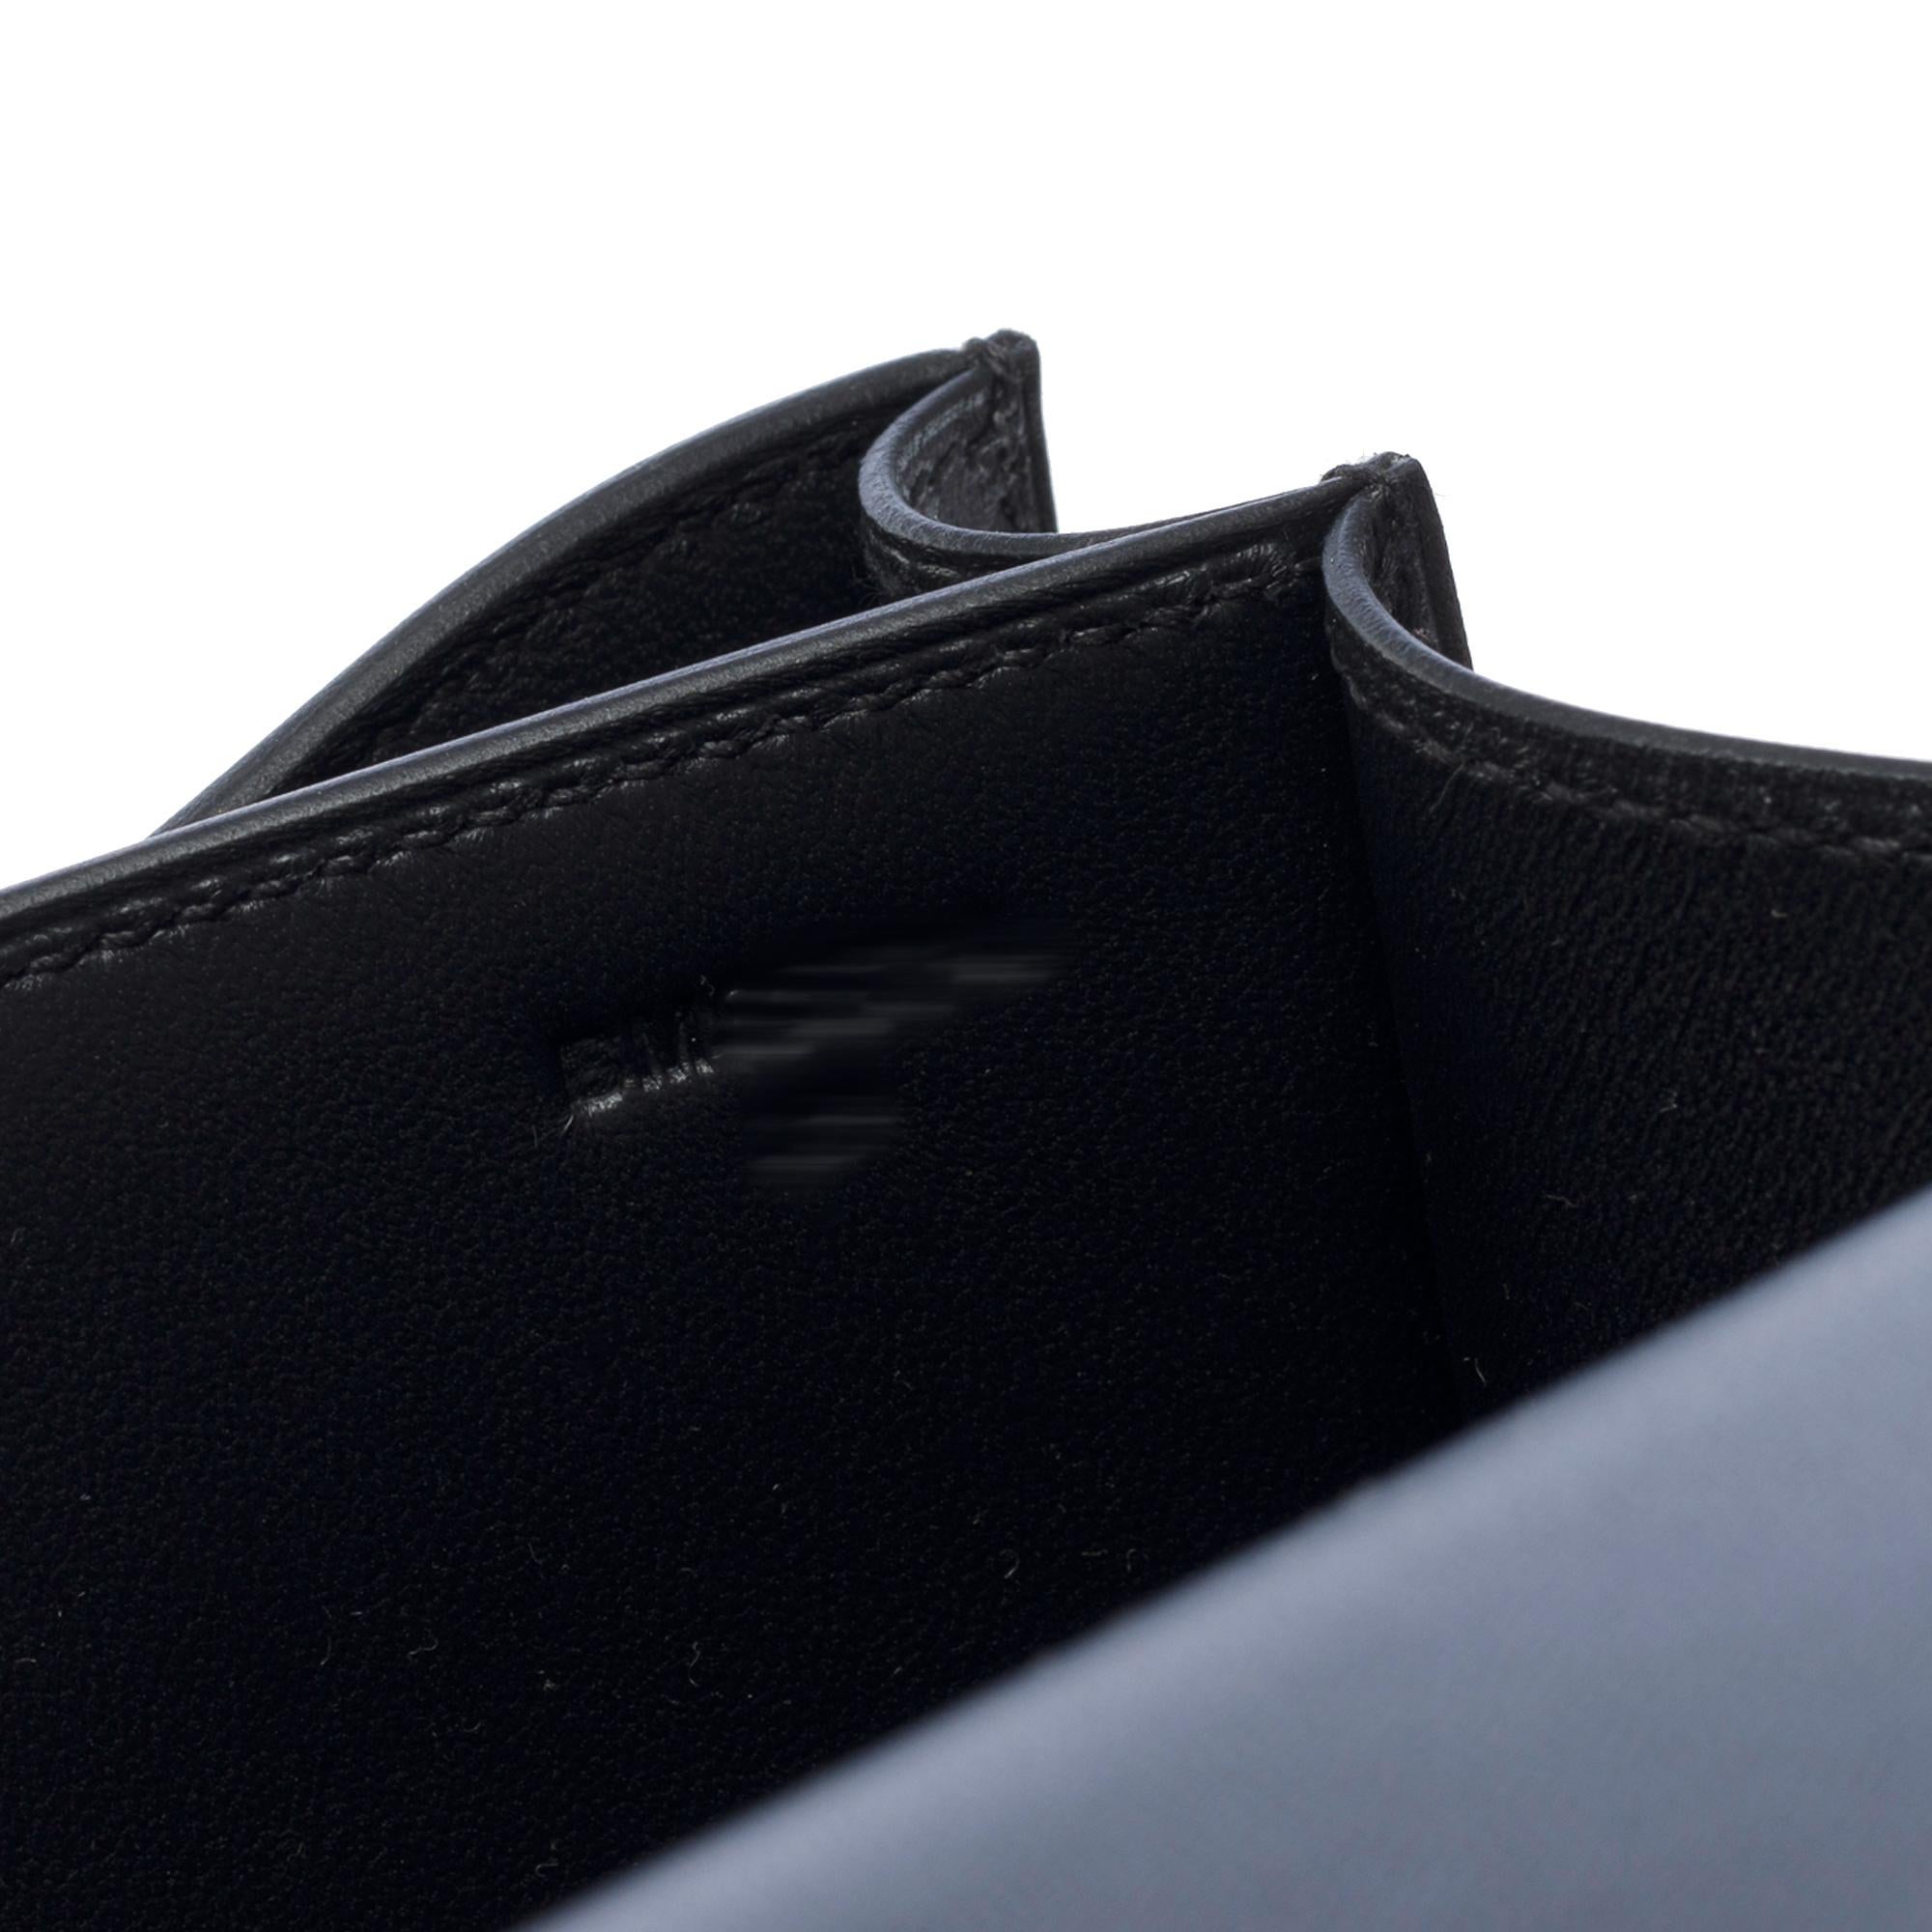 Hermès Constance III Mini 18 Mirror shoulder bag in black box calf leather, GHW For Sale 2